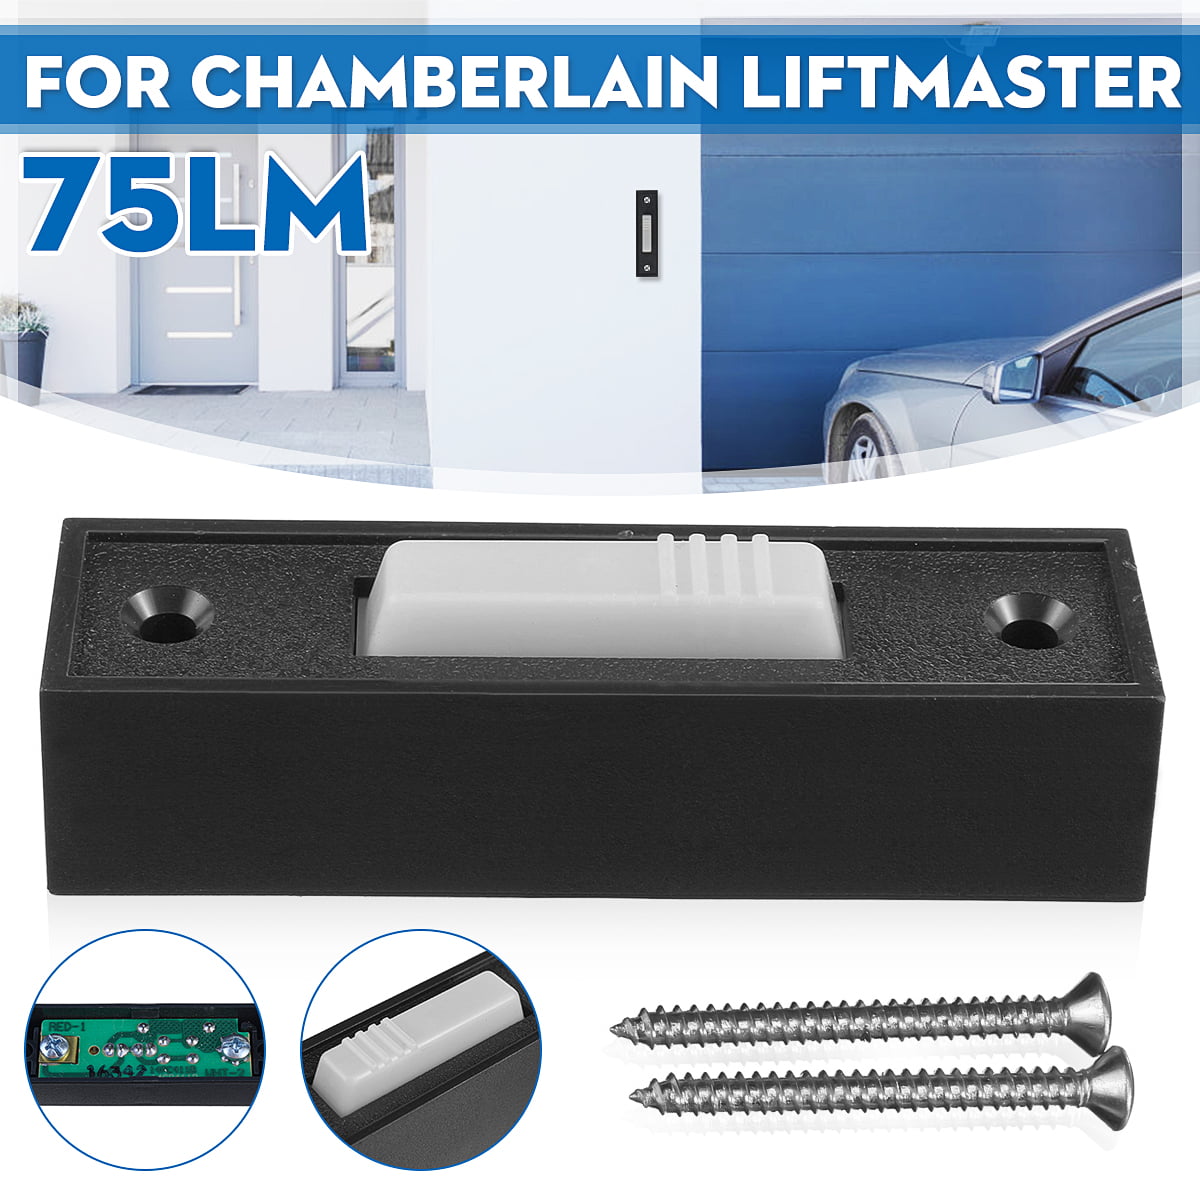 LiftMaster 78LM Chamberlain Multi-Function Garage Wall Control OEM